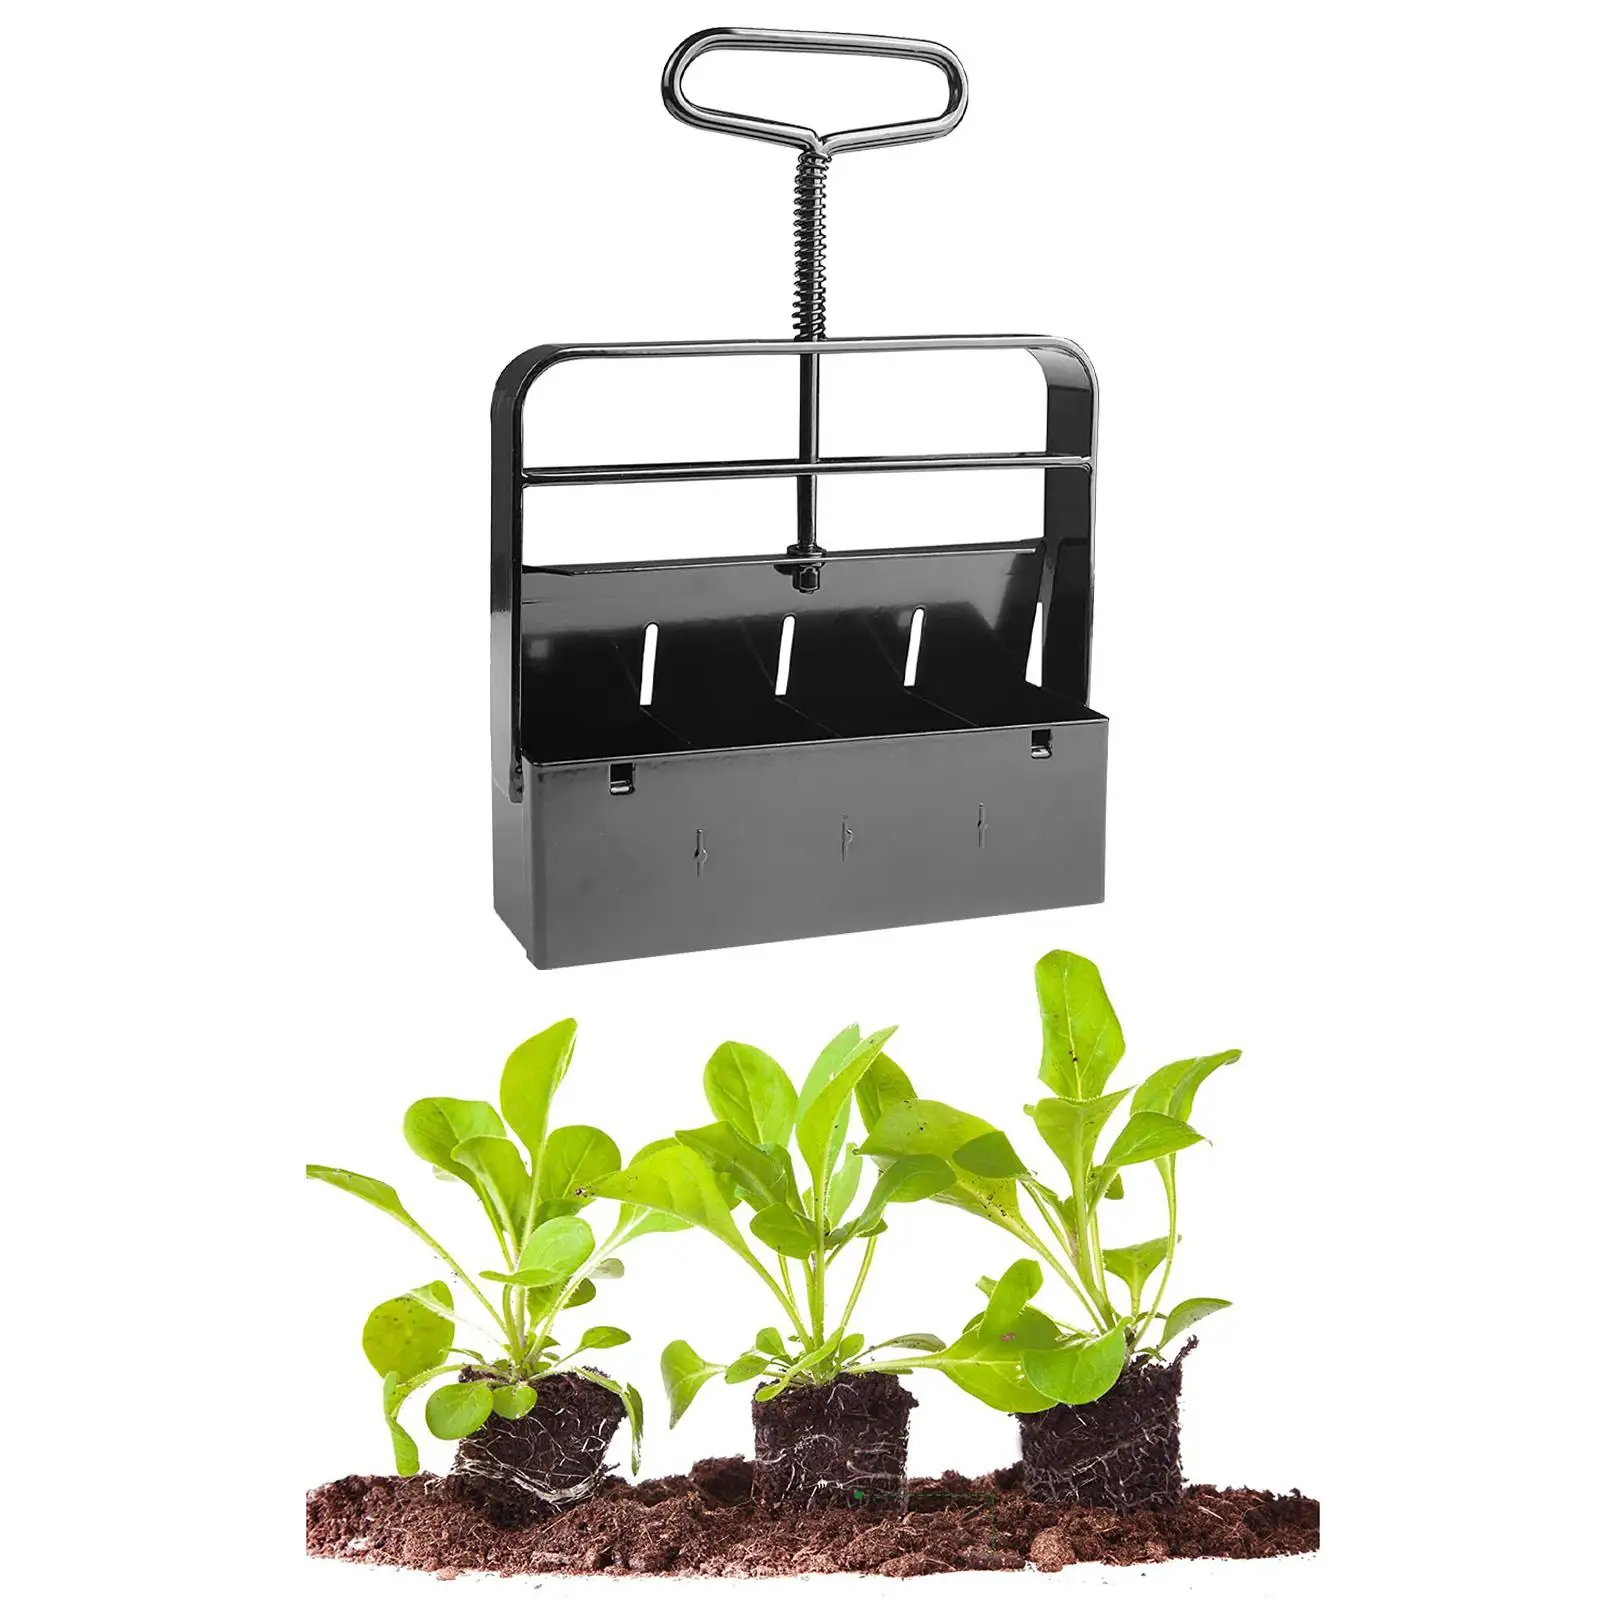 2 inch Mould Soil Blocker for Greenhouse Seedling Outdoor Vegetable Fruits